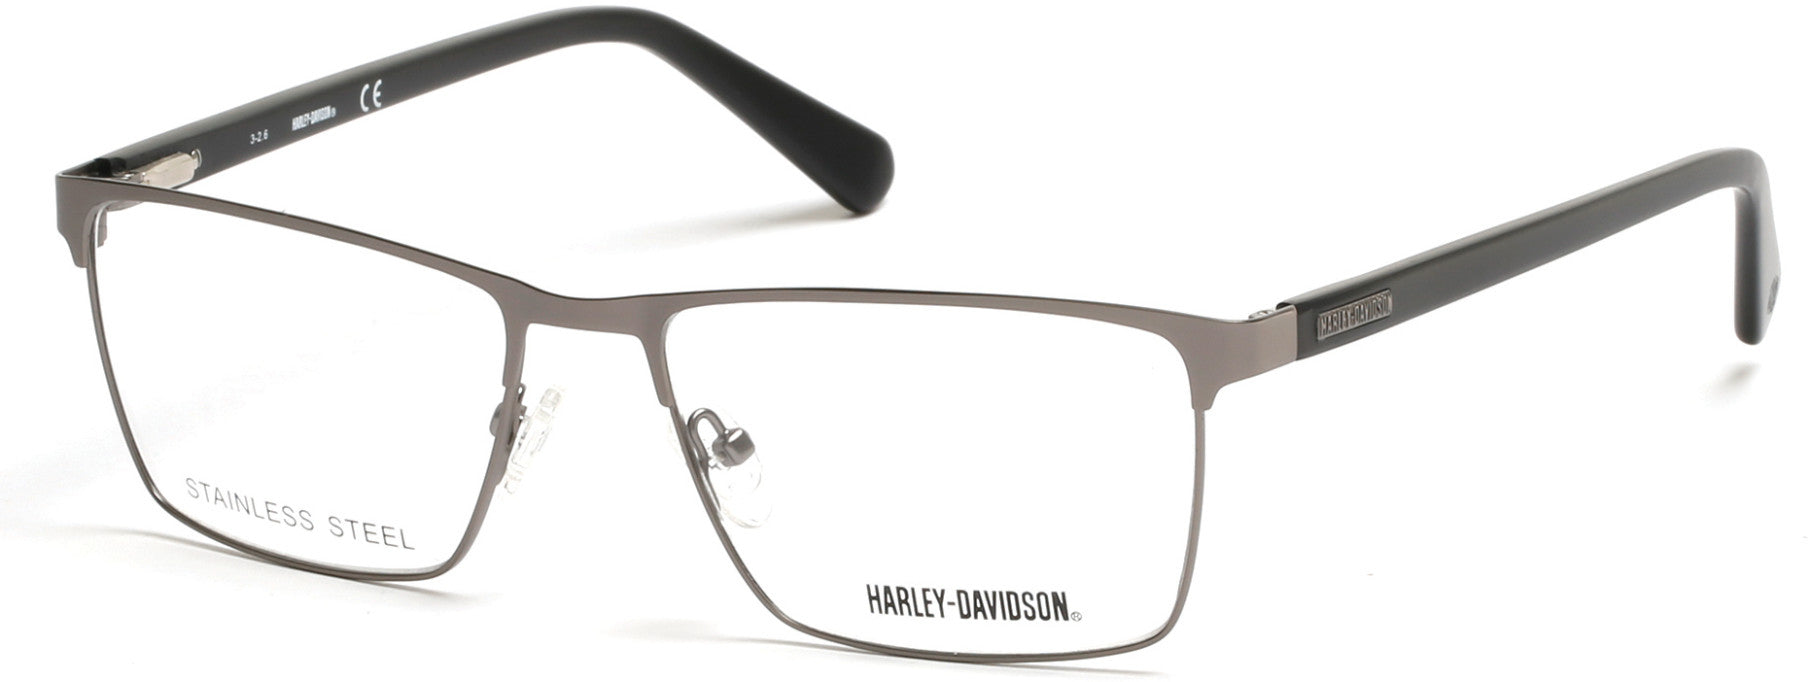 Harley-Davidson HD0757 Eyeglasses 007-007 - Matte Dark Nickeltin